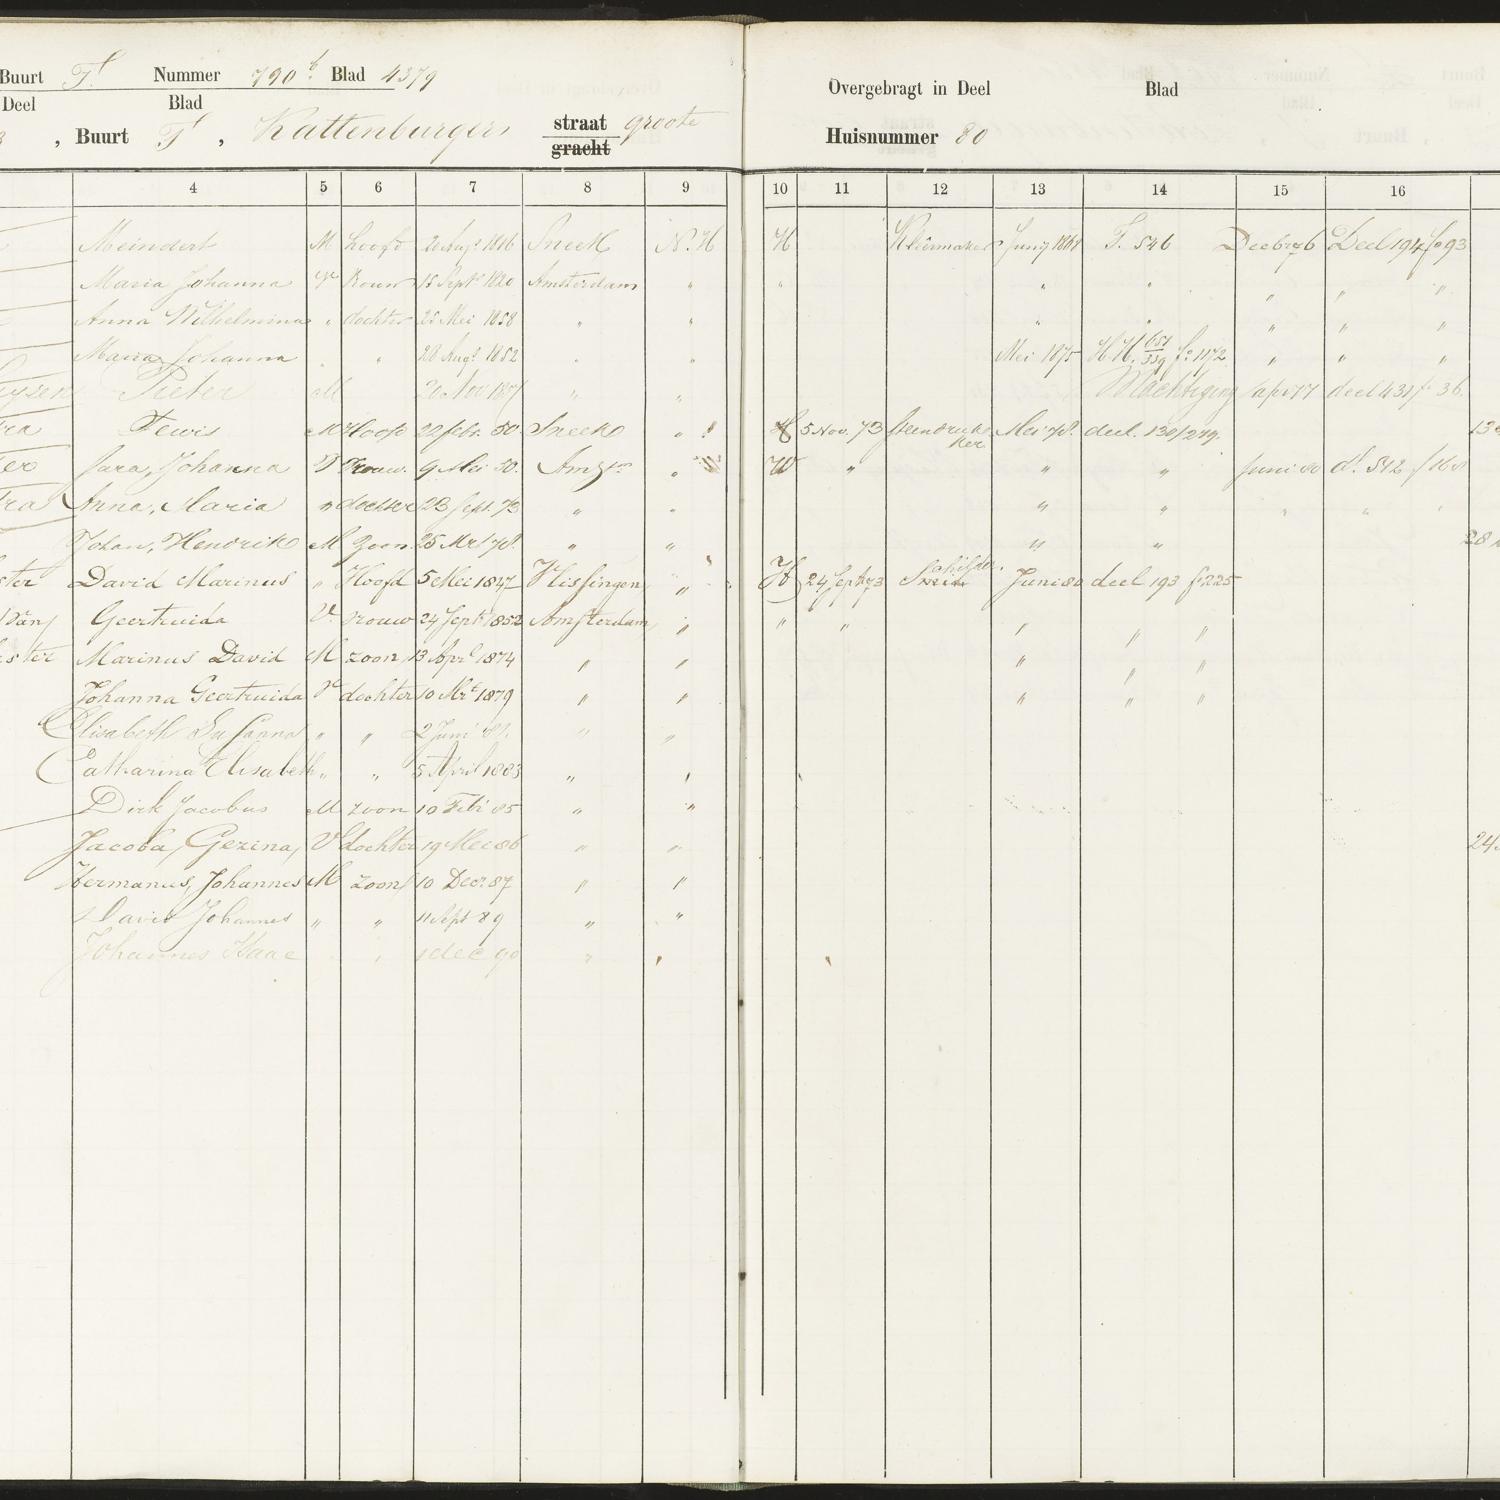 Population registry, Amsterdam, 1874-1893, part 191, sheet 113